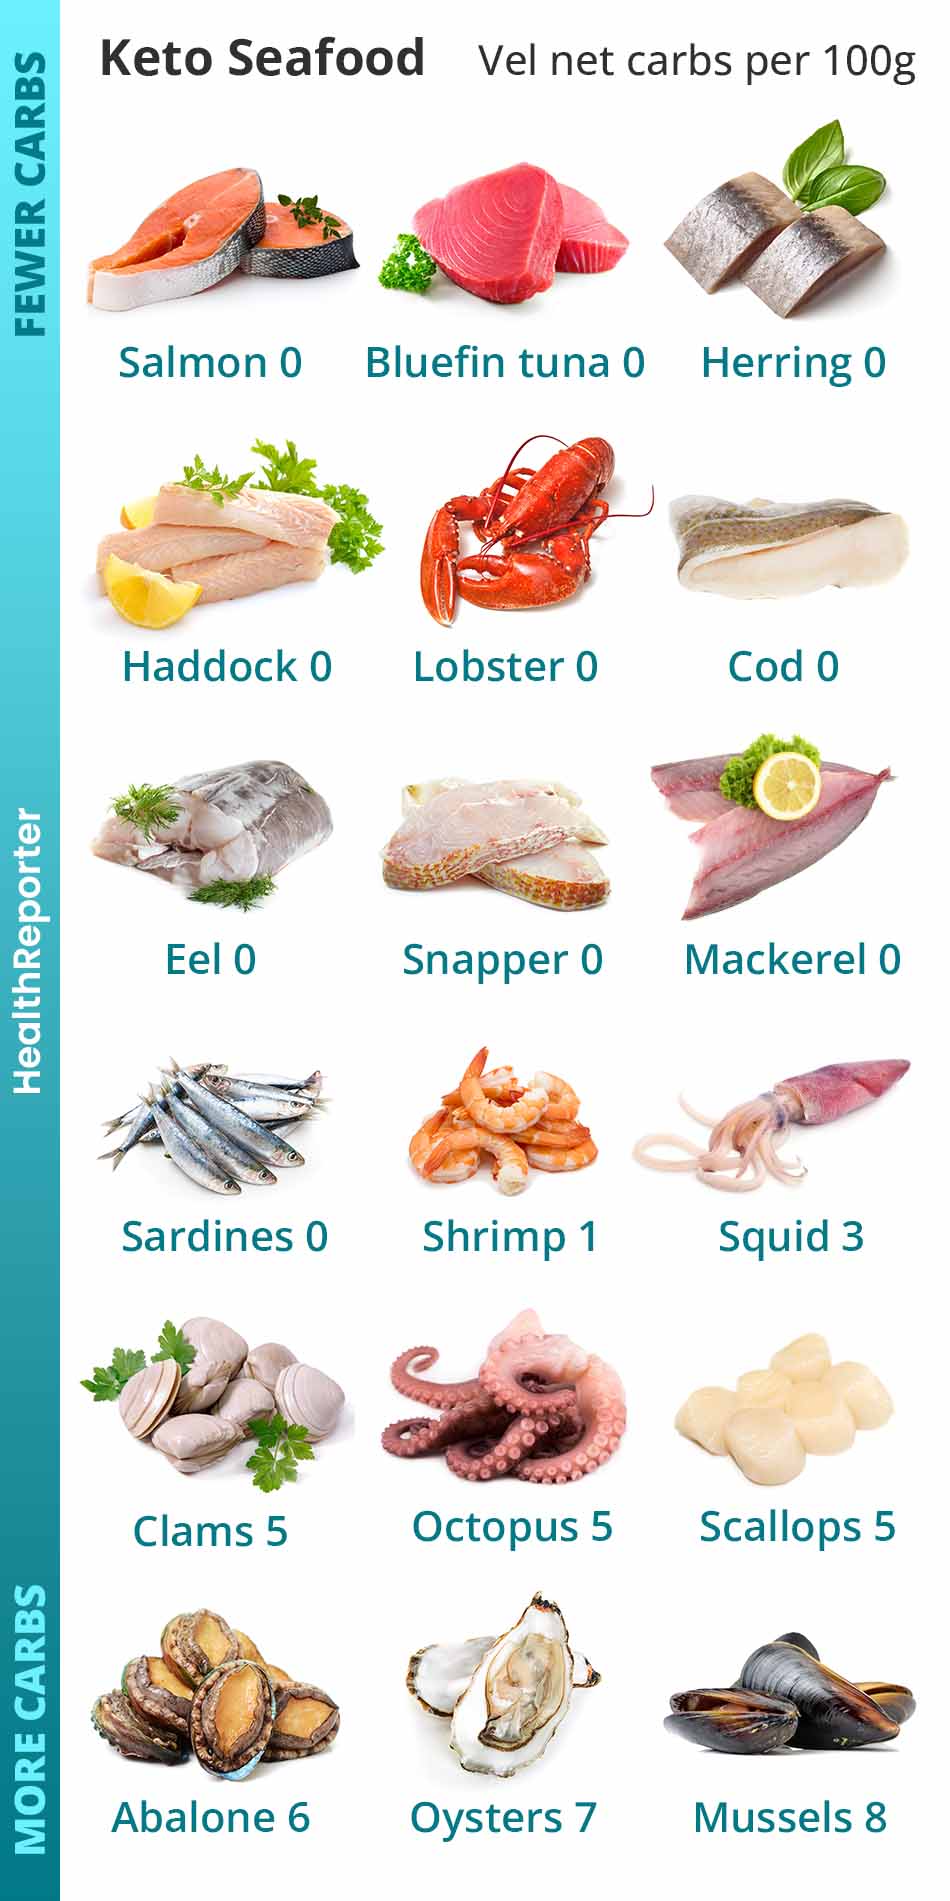 Keto friendly seafood list